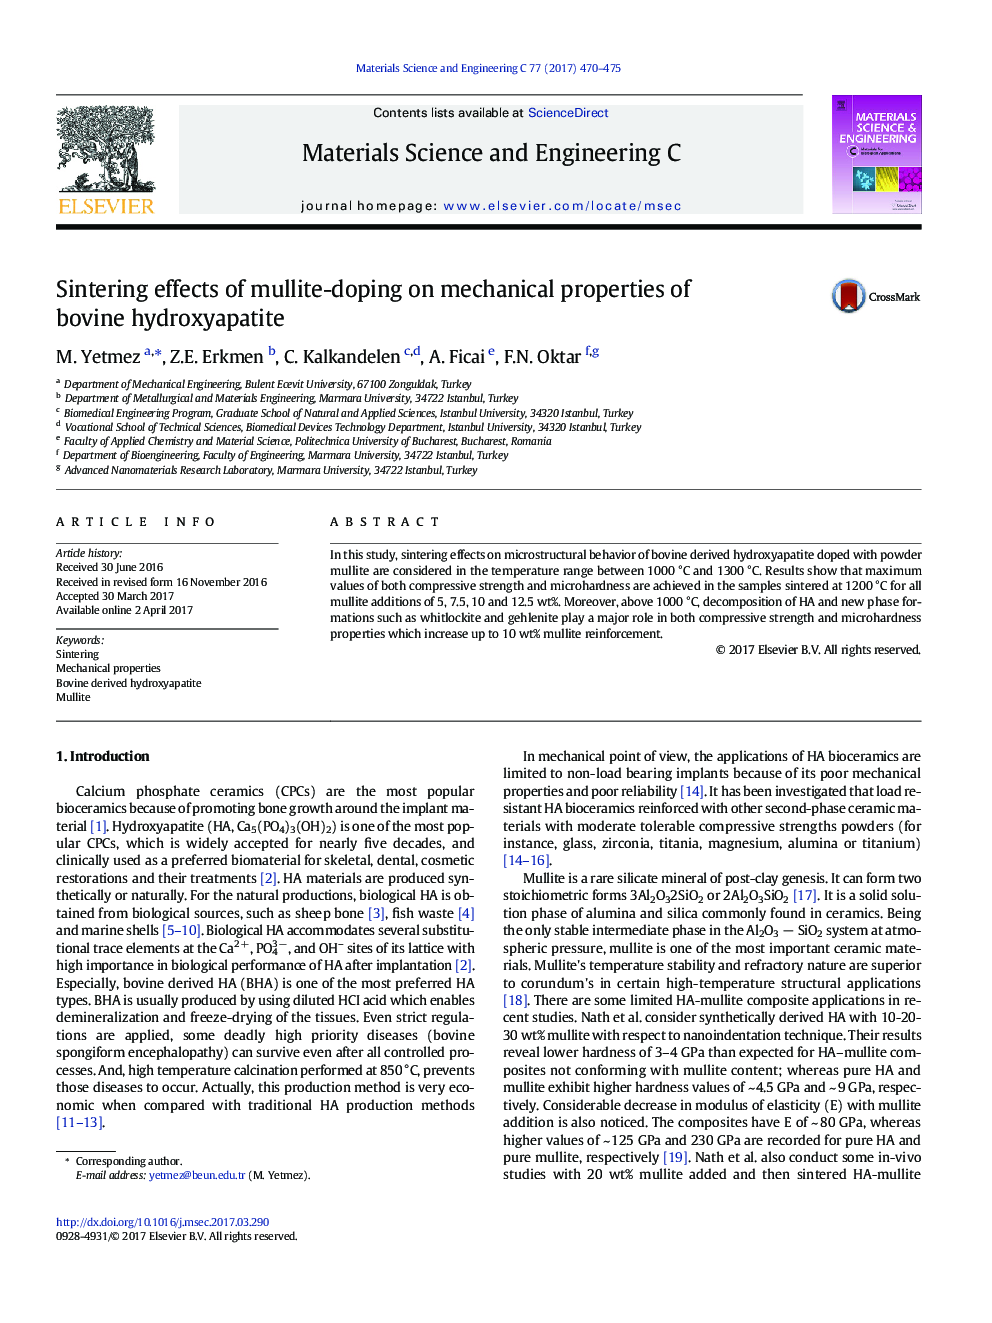 Sintering effects of mullite-doping on mechanical properties of bovine hydroxyapatite